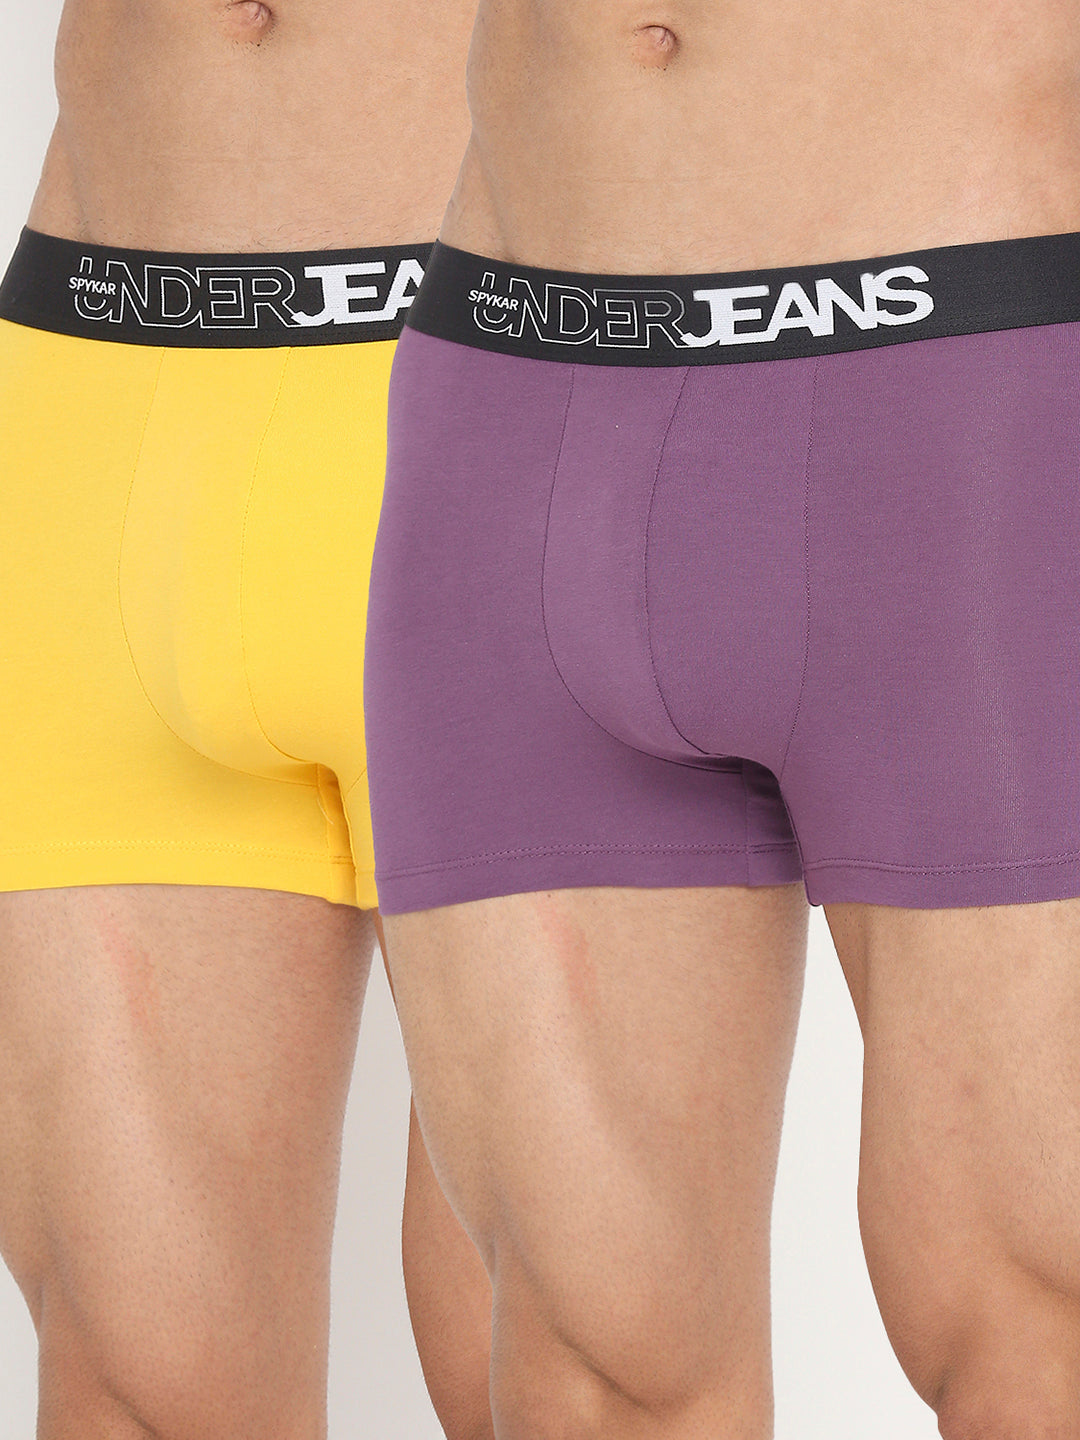 Men Premium Cotton Blend Assorted Trunk Pack of 2 - UnderJeans by Spykar